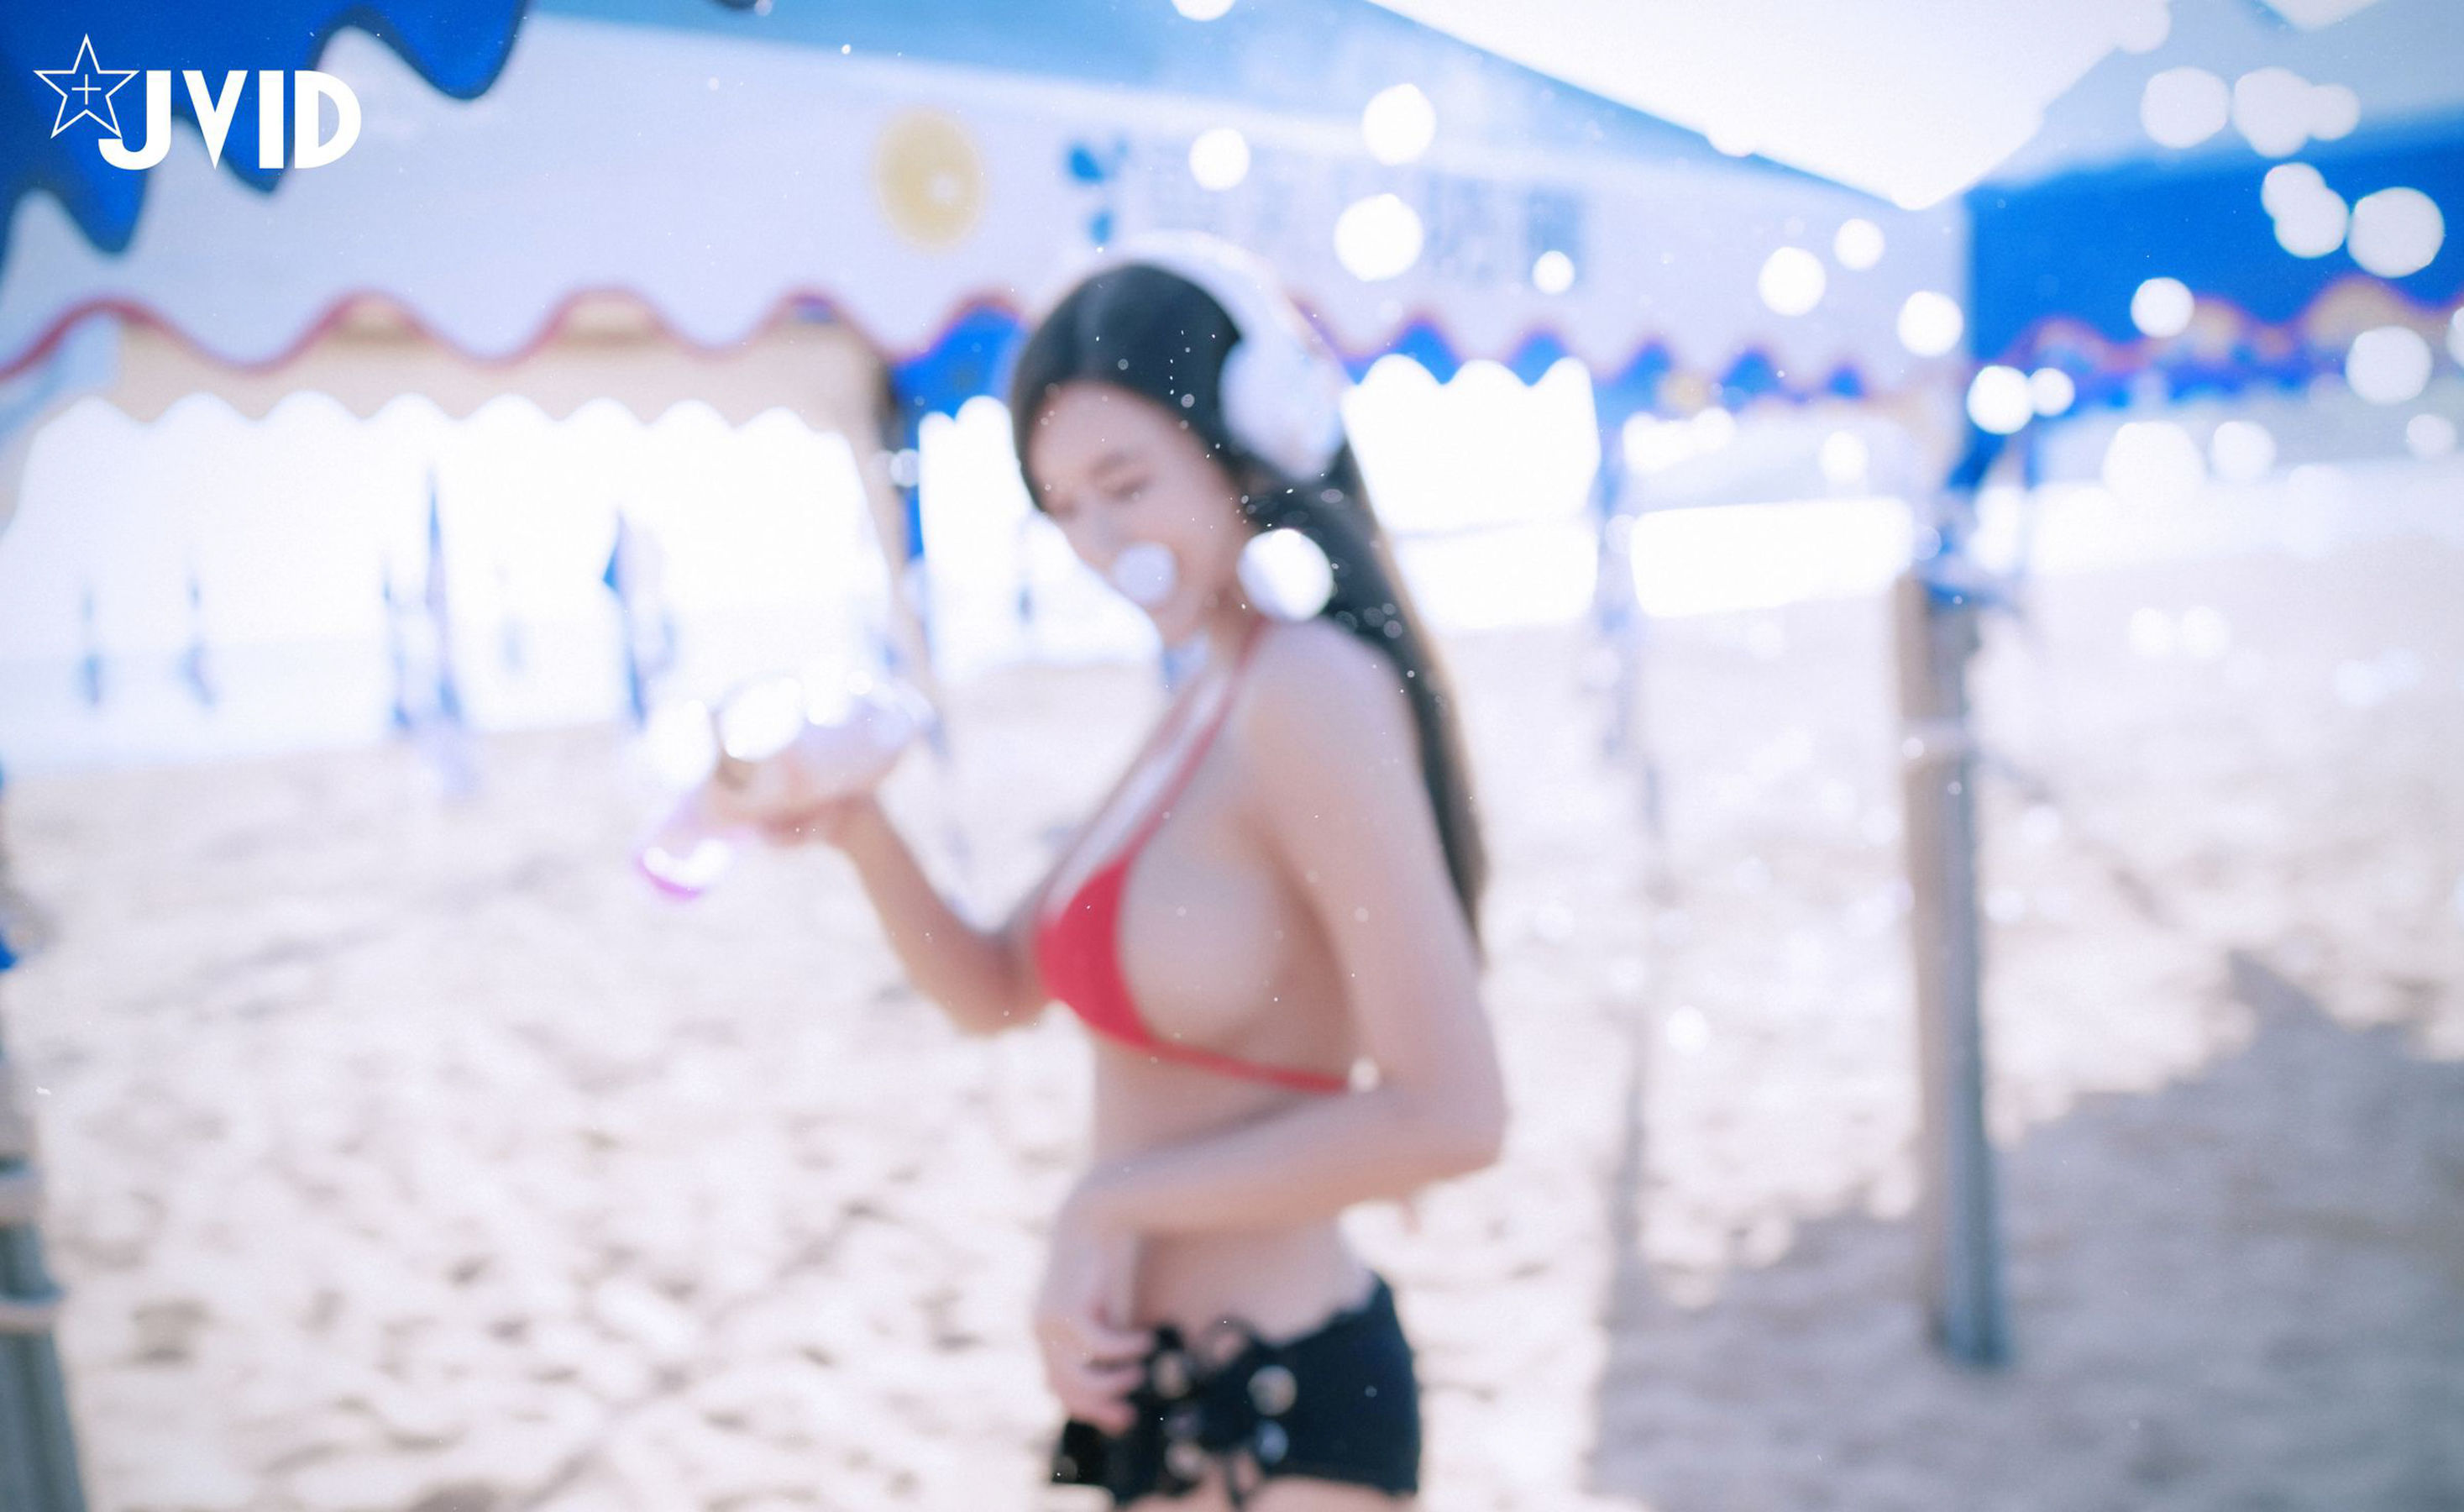 [JVID图集] Bikini sexy beach  第11张